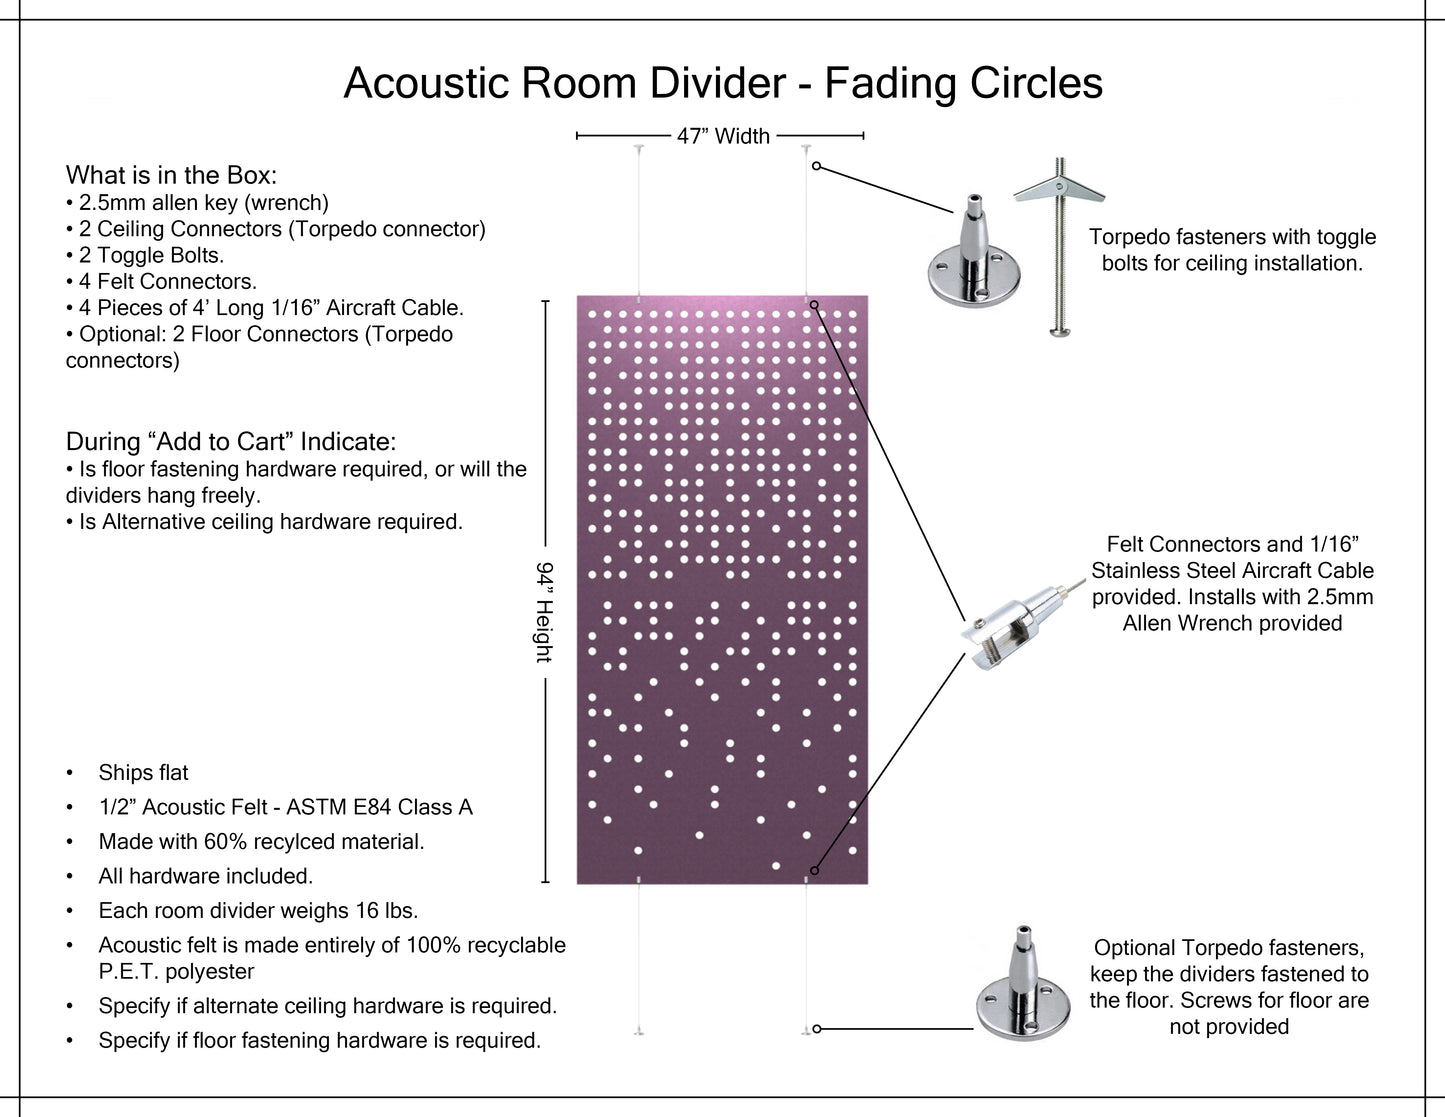 4x8 Acoustic Room Divider - Fading Circles